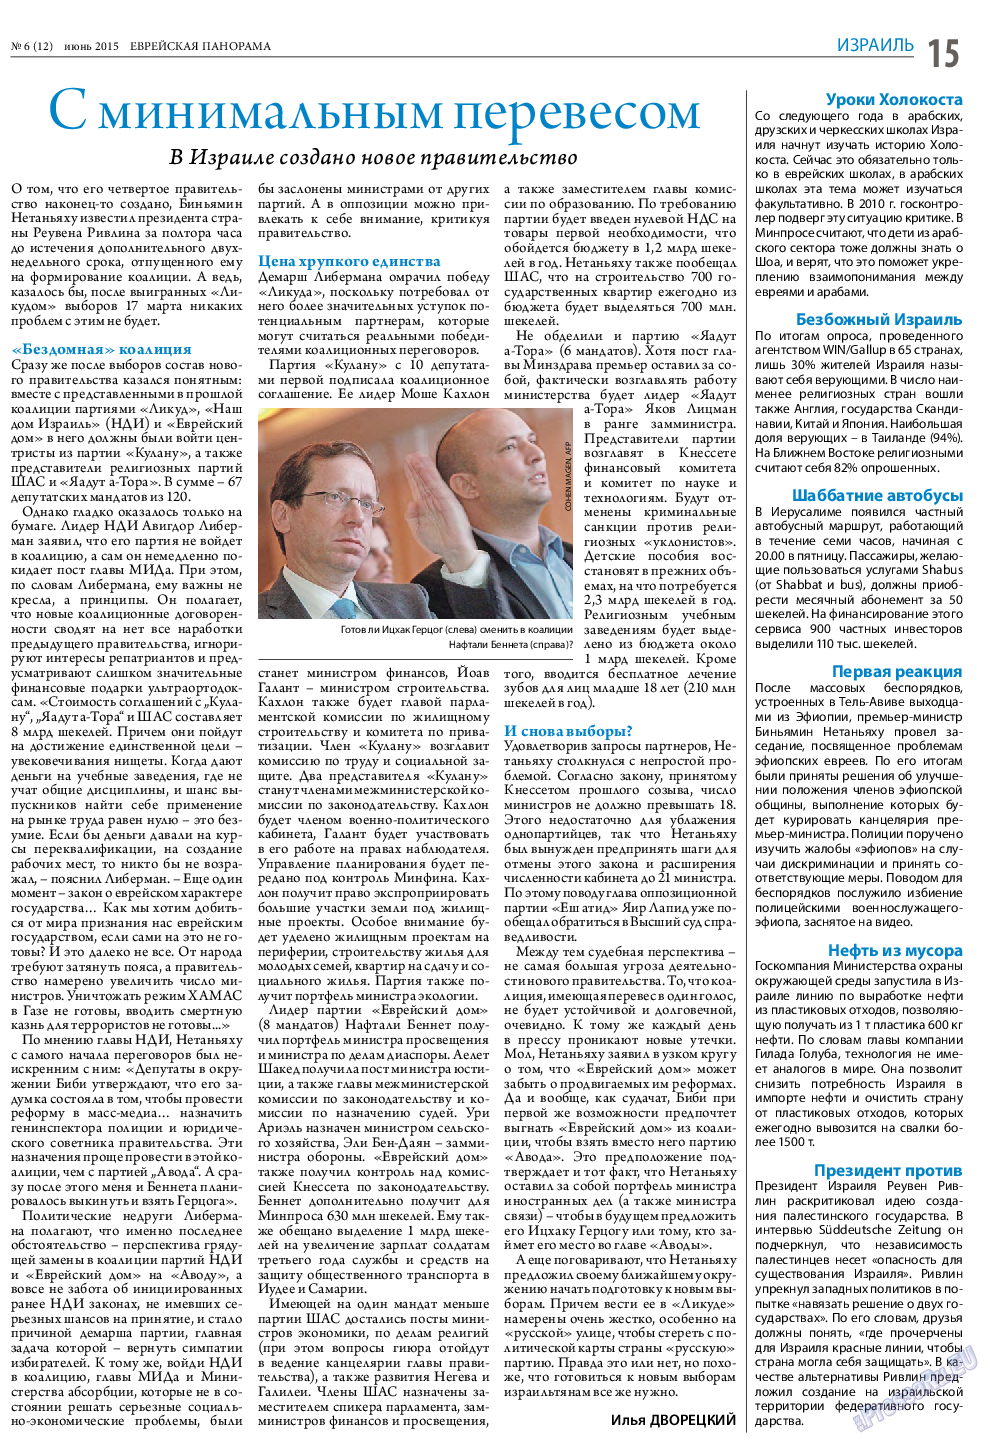 Еврейская панорама, газета. 2015 №6 стр.15